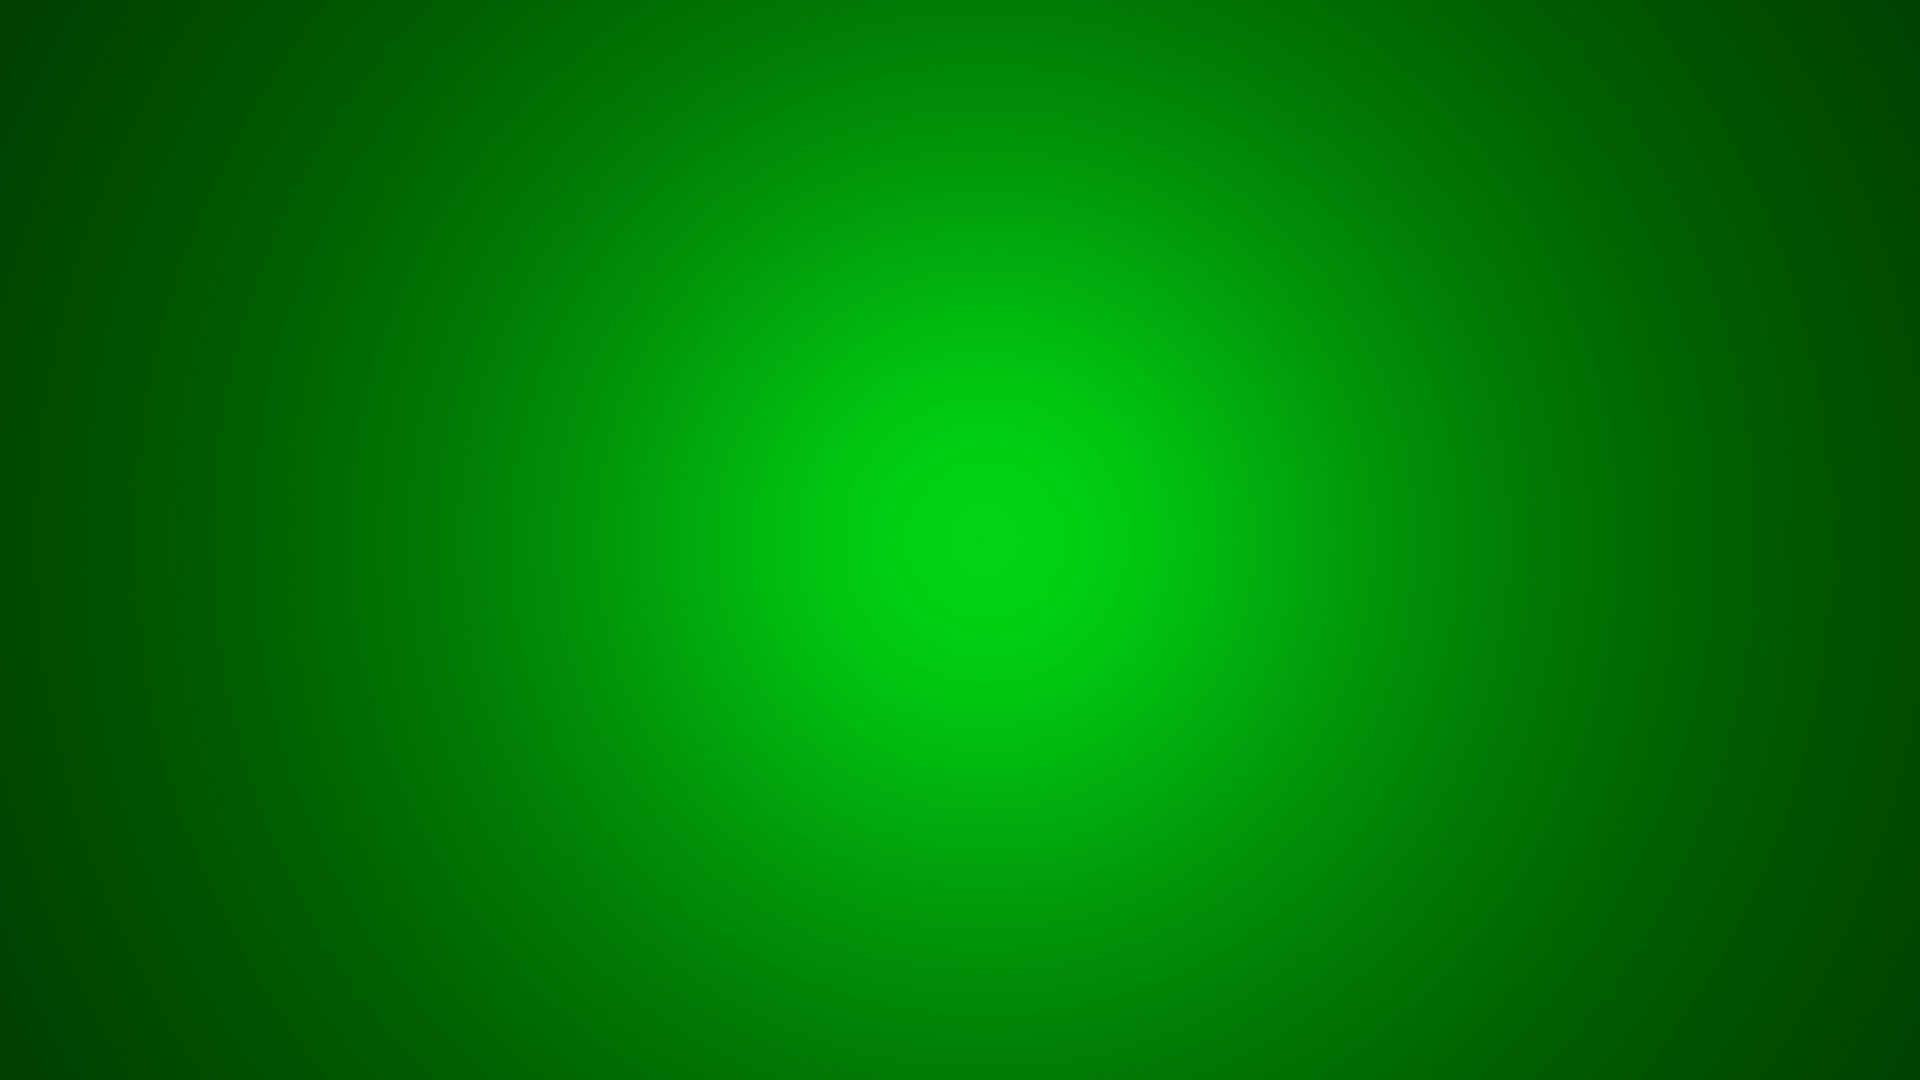 1920x1080 Hd Green Wallpaper Â· hd green wallpaper free powerpoint background